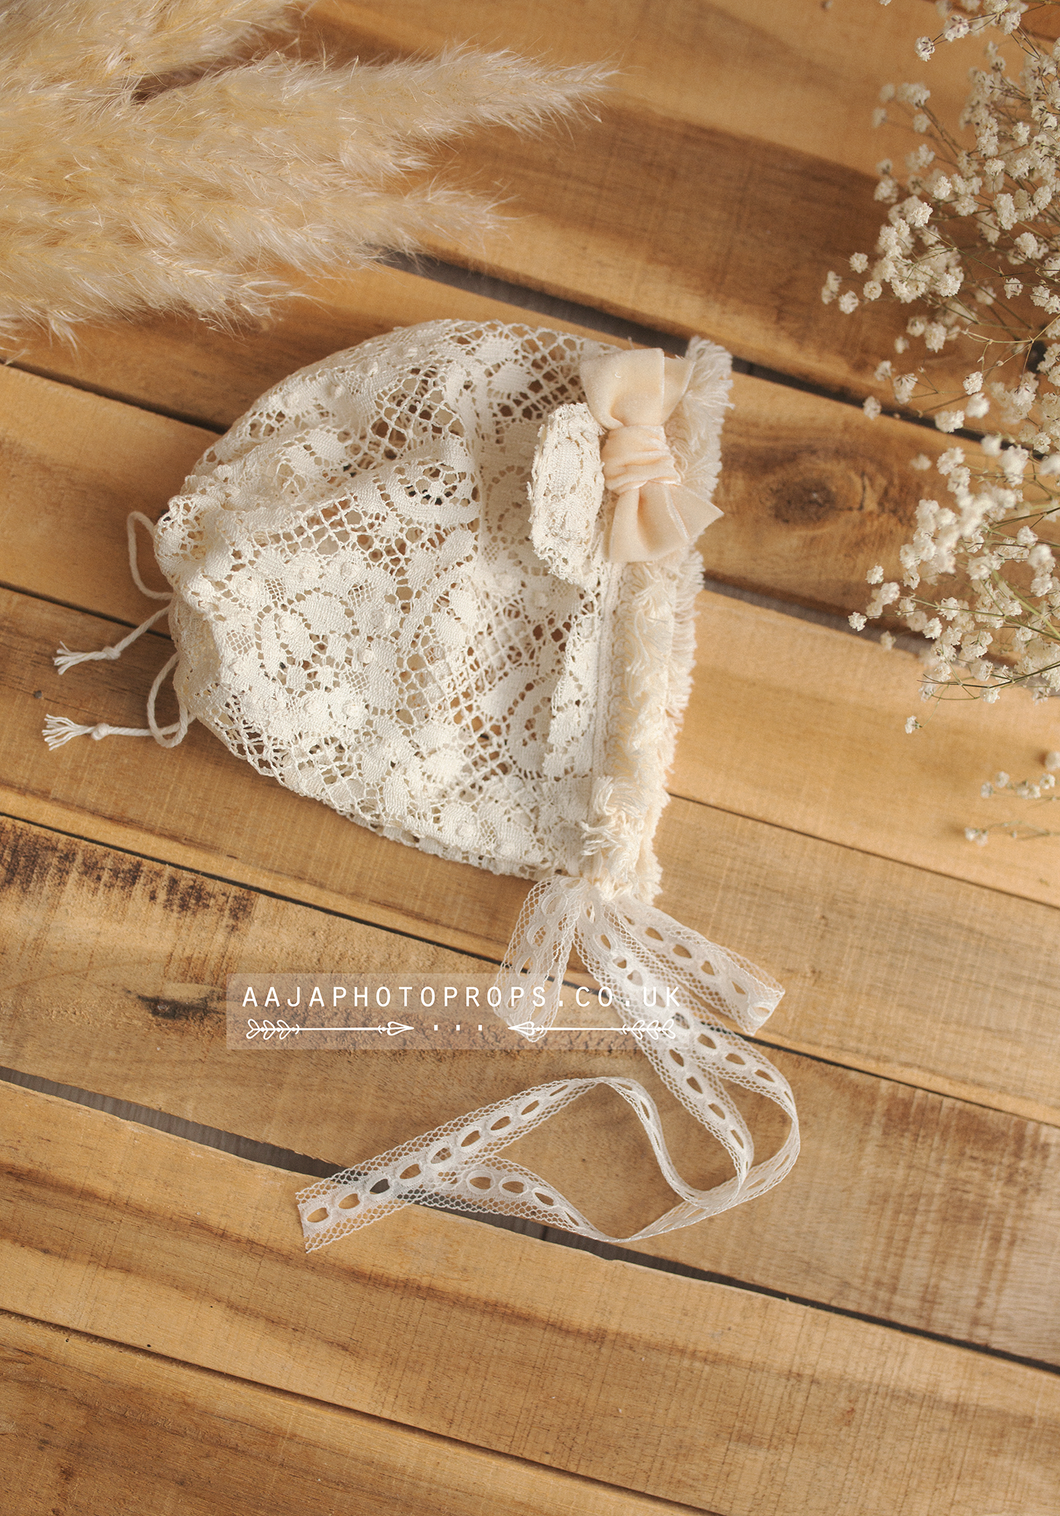 Baby lace bonnet, Cream, boho, bear ears, 6-12 months, vintage,  RTS